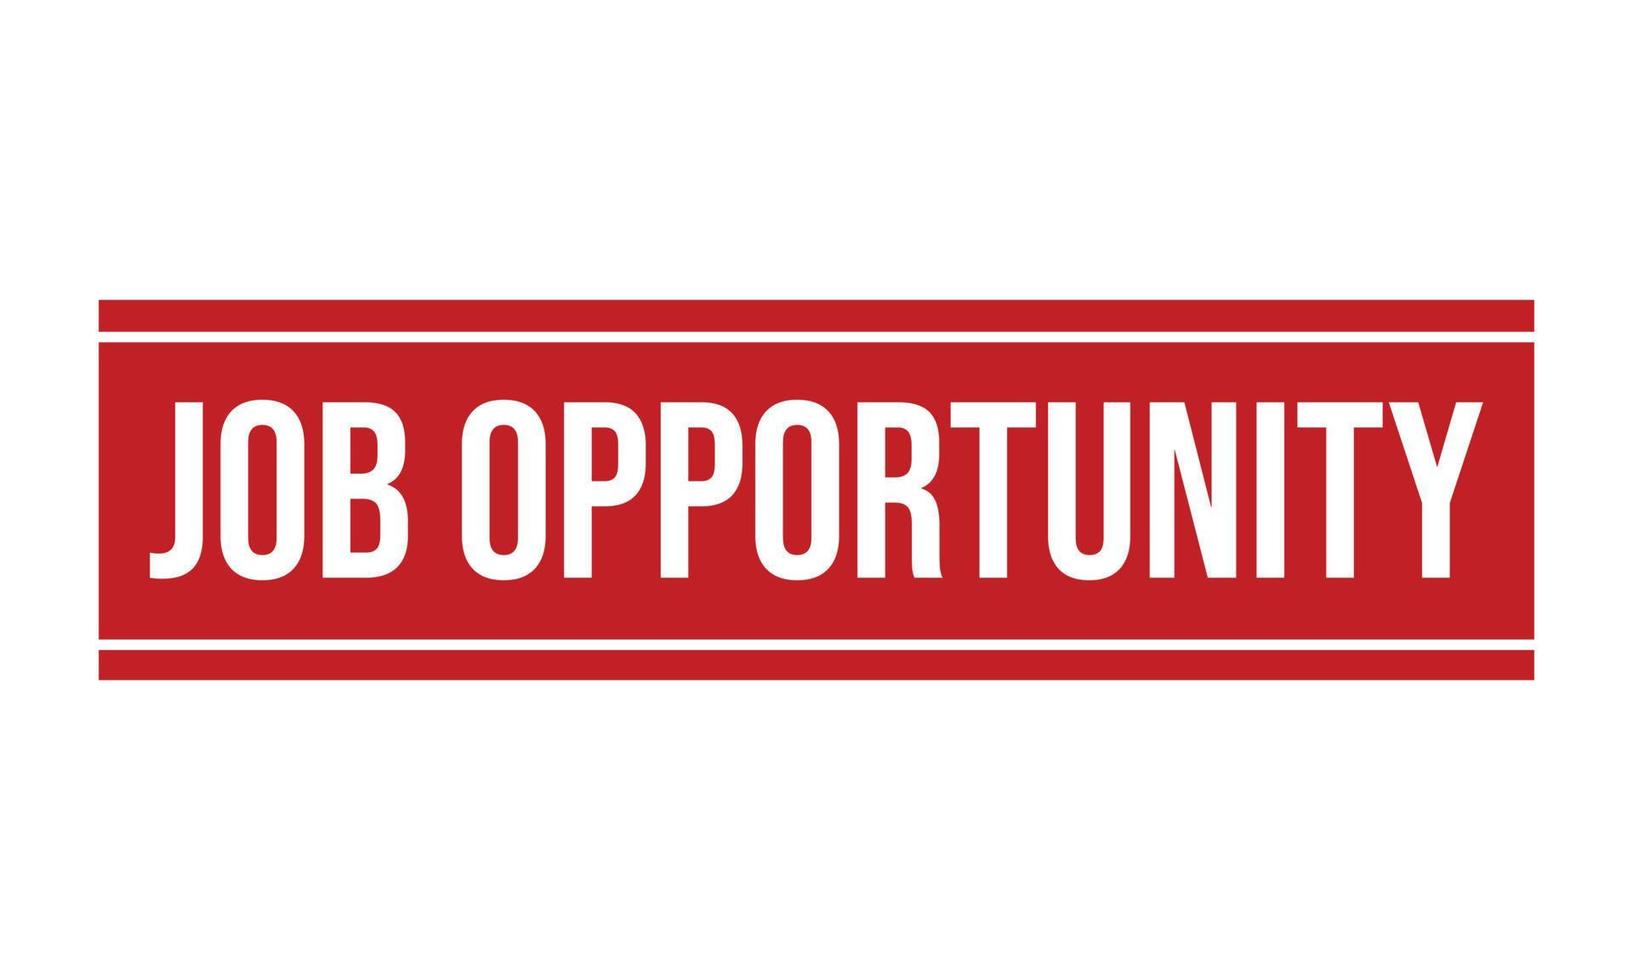 Job Opportunity Rubber Stamp. Job Opportunity Grunge Stamp Seal Vector Illustration